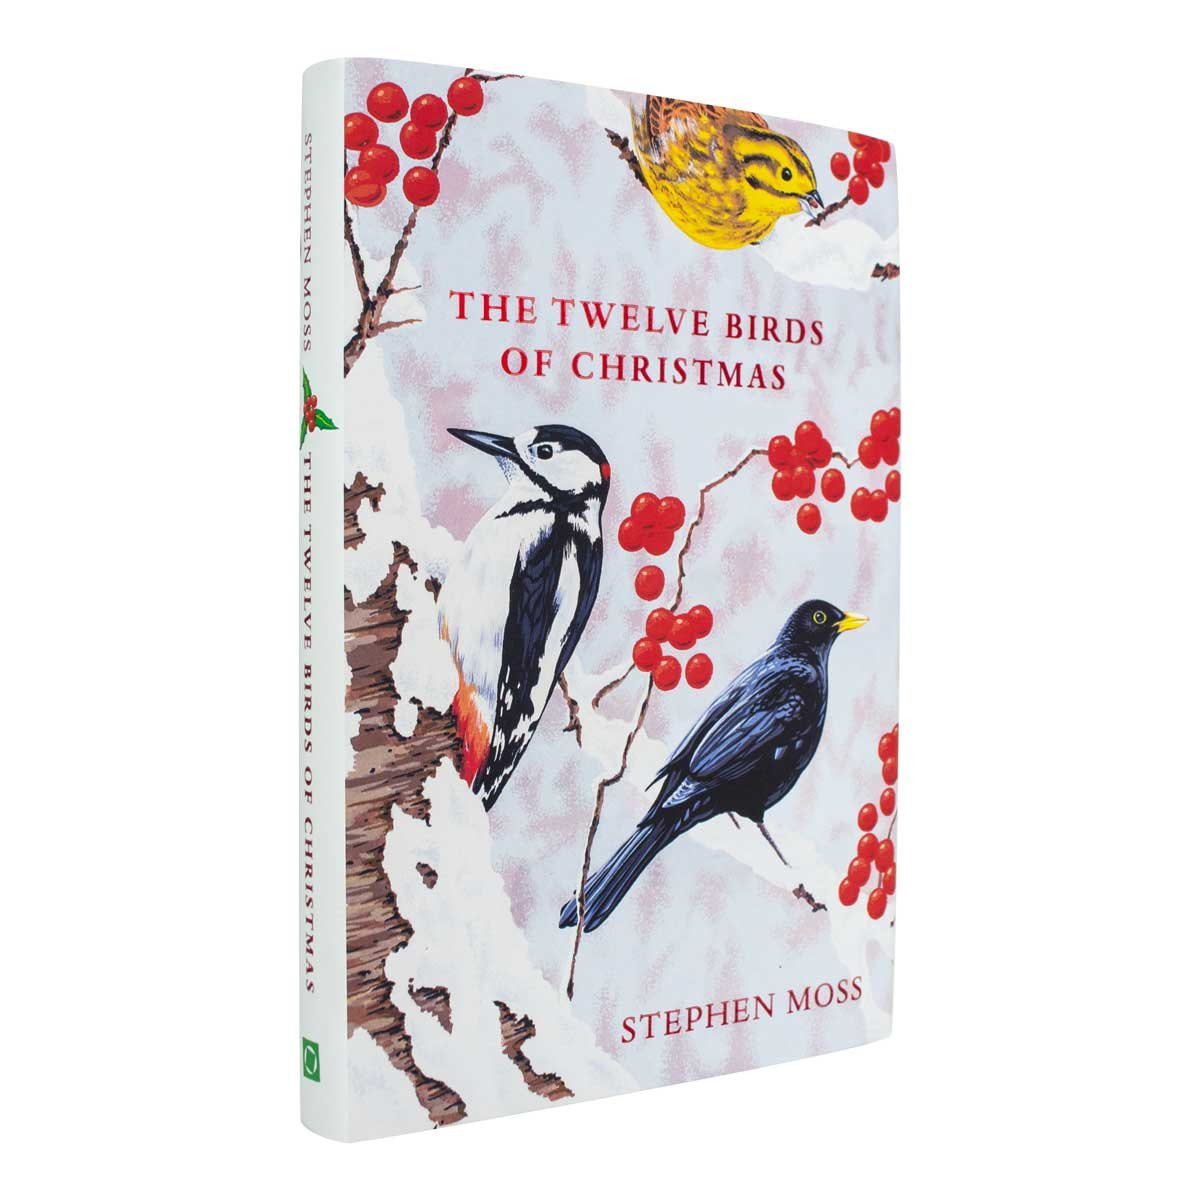 The Twelve Birds of Christmas